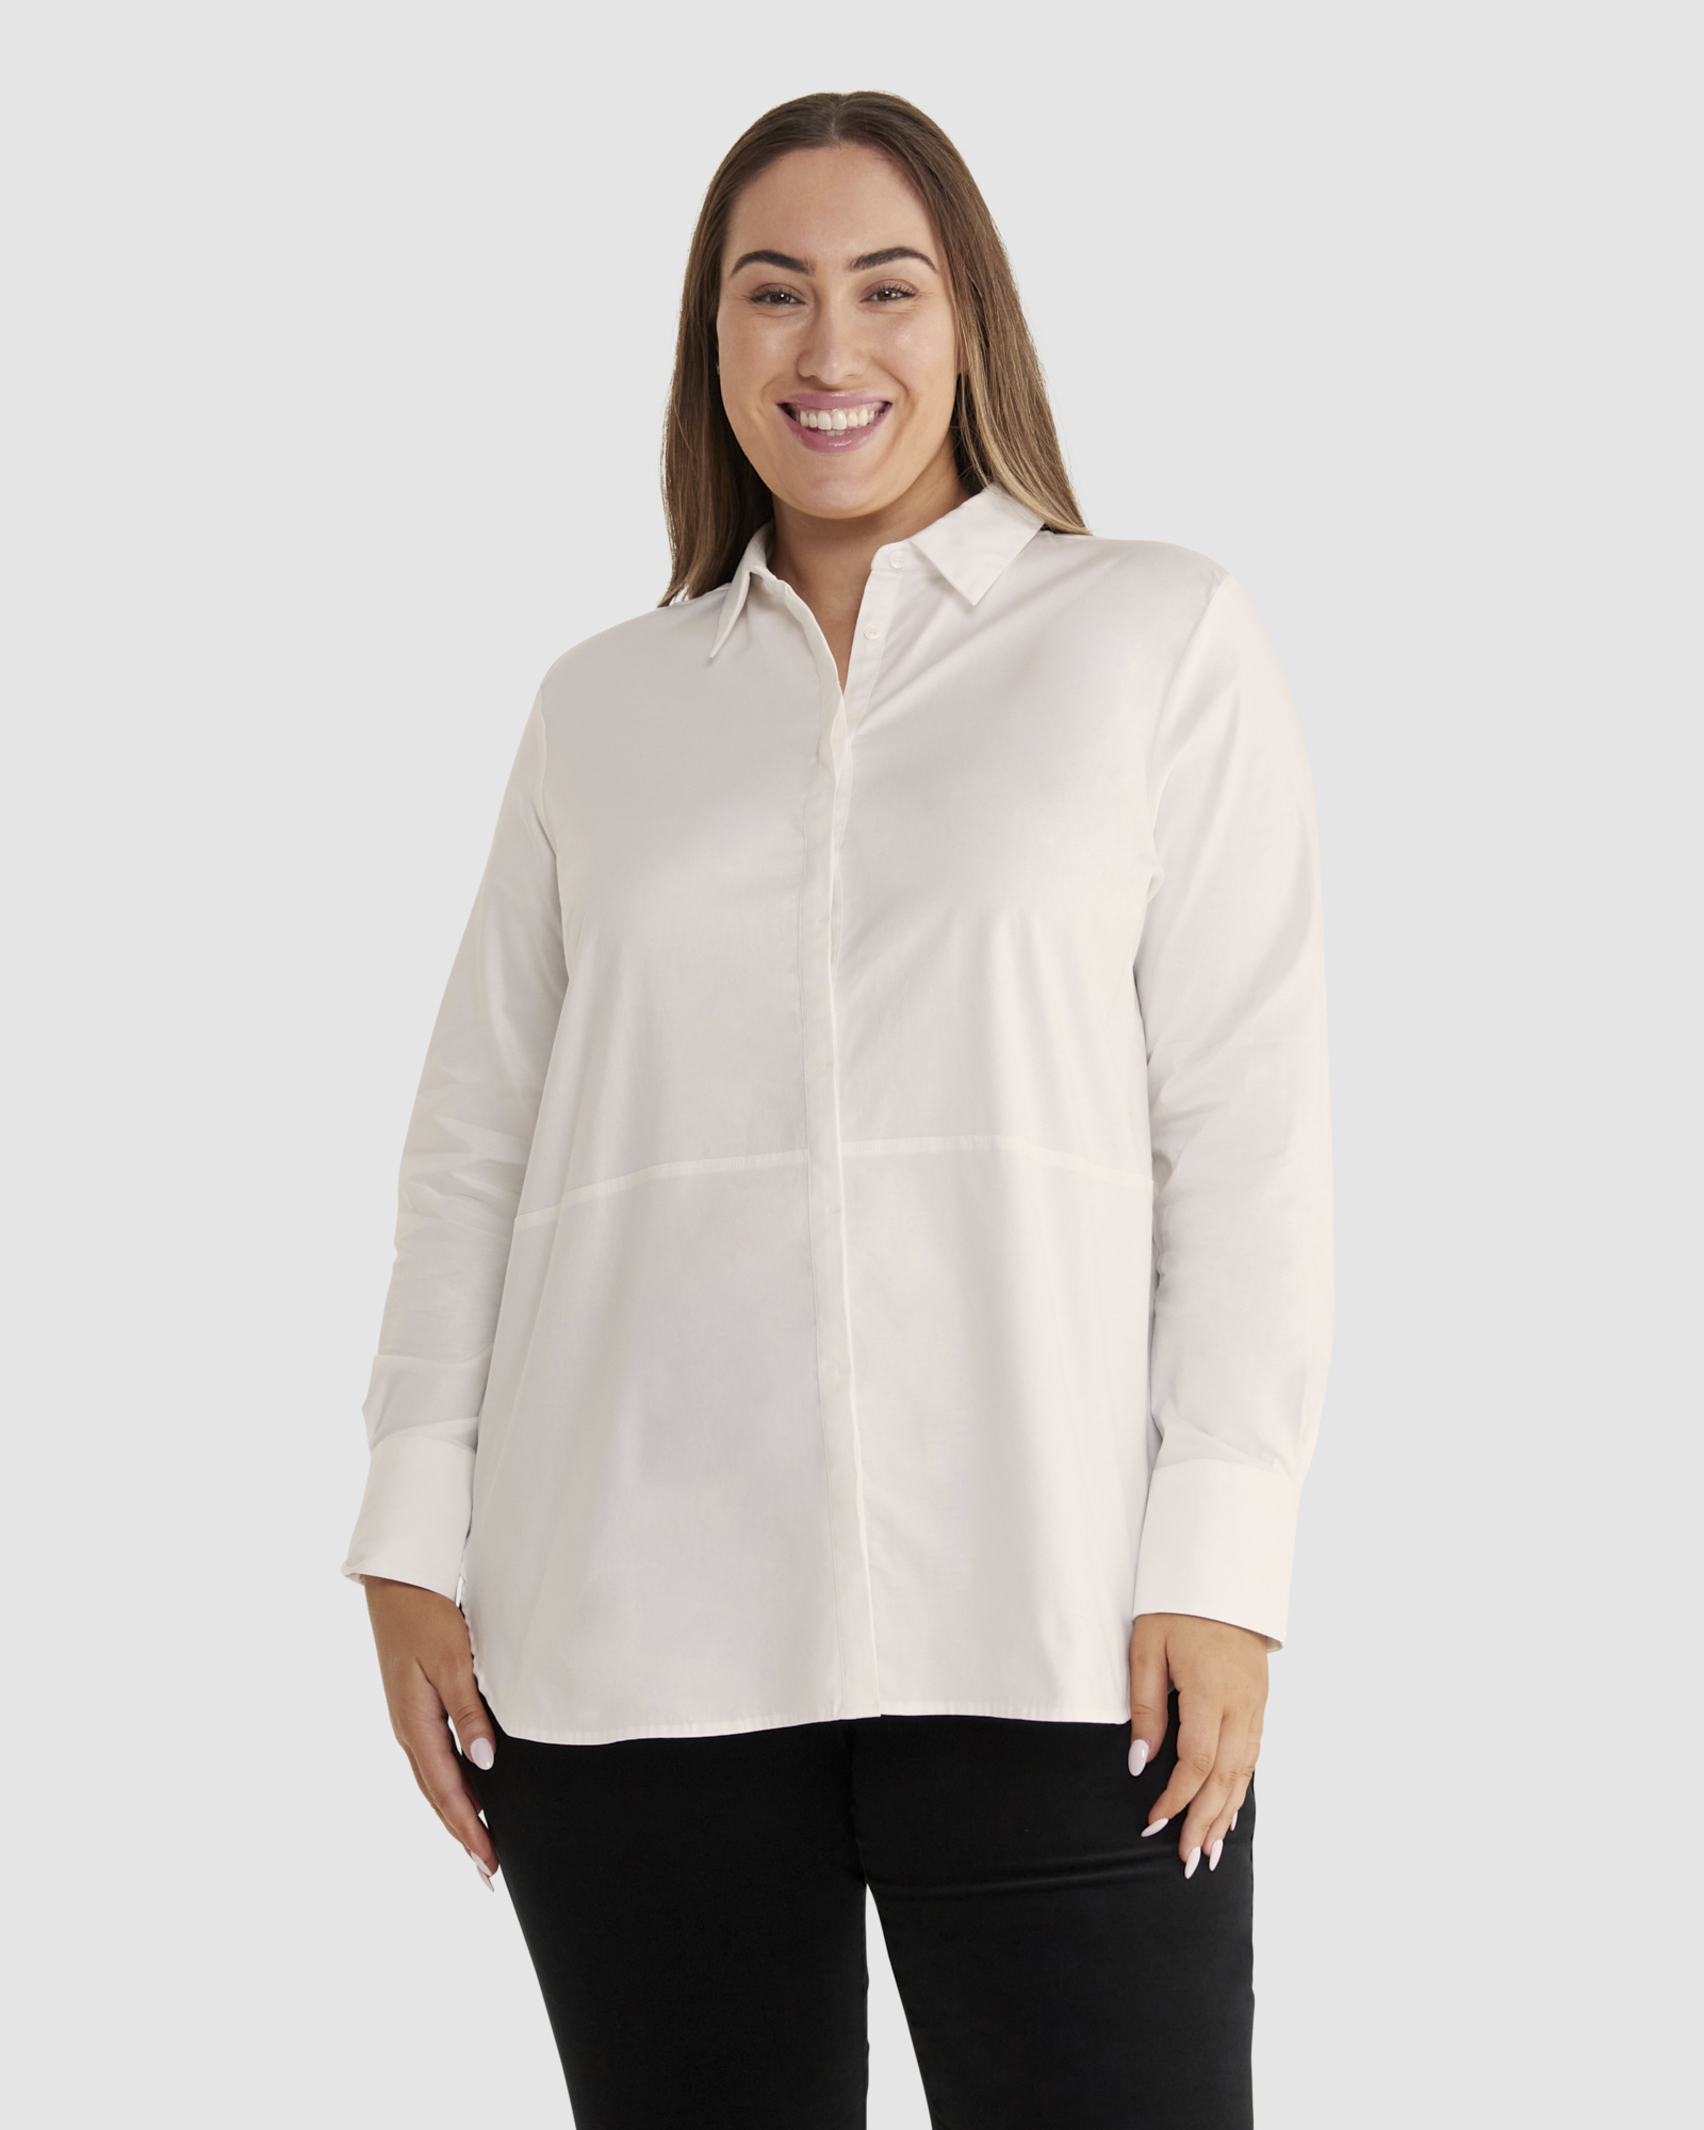 Geri Oxford Shirt in WHITE